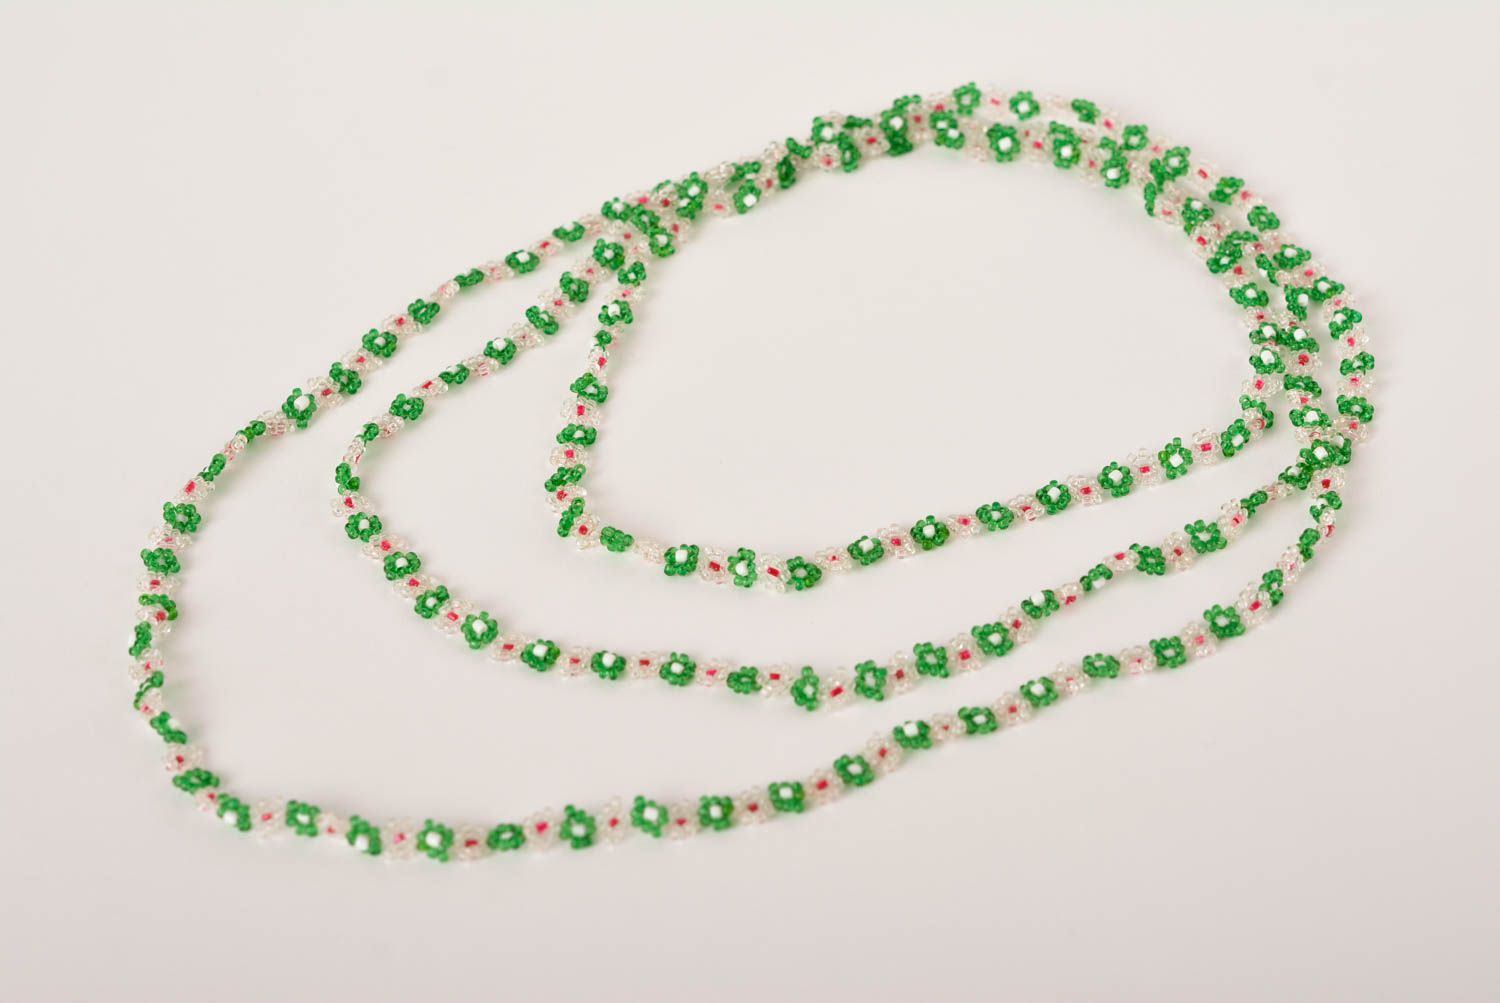 Stylish handmade beaded necklace cool jewelry designs bead weaving ideas photo 1